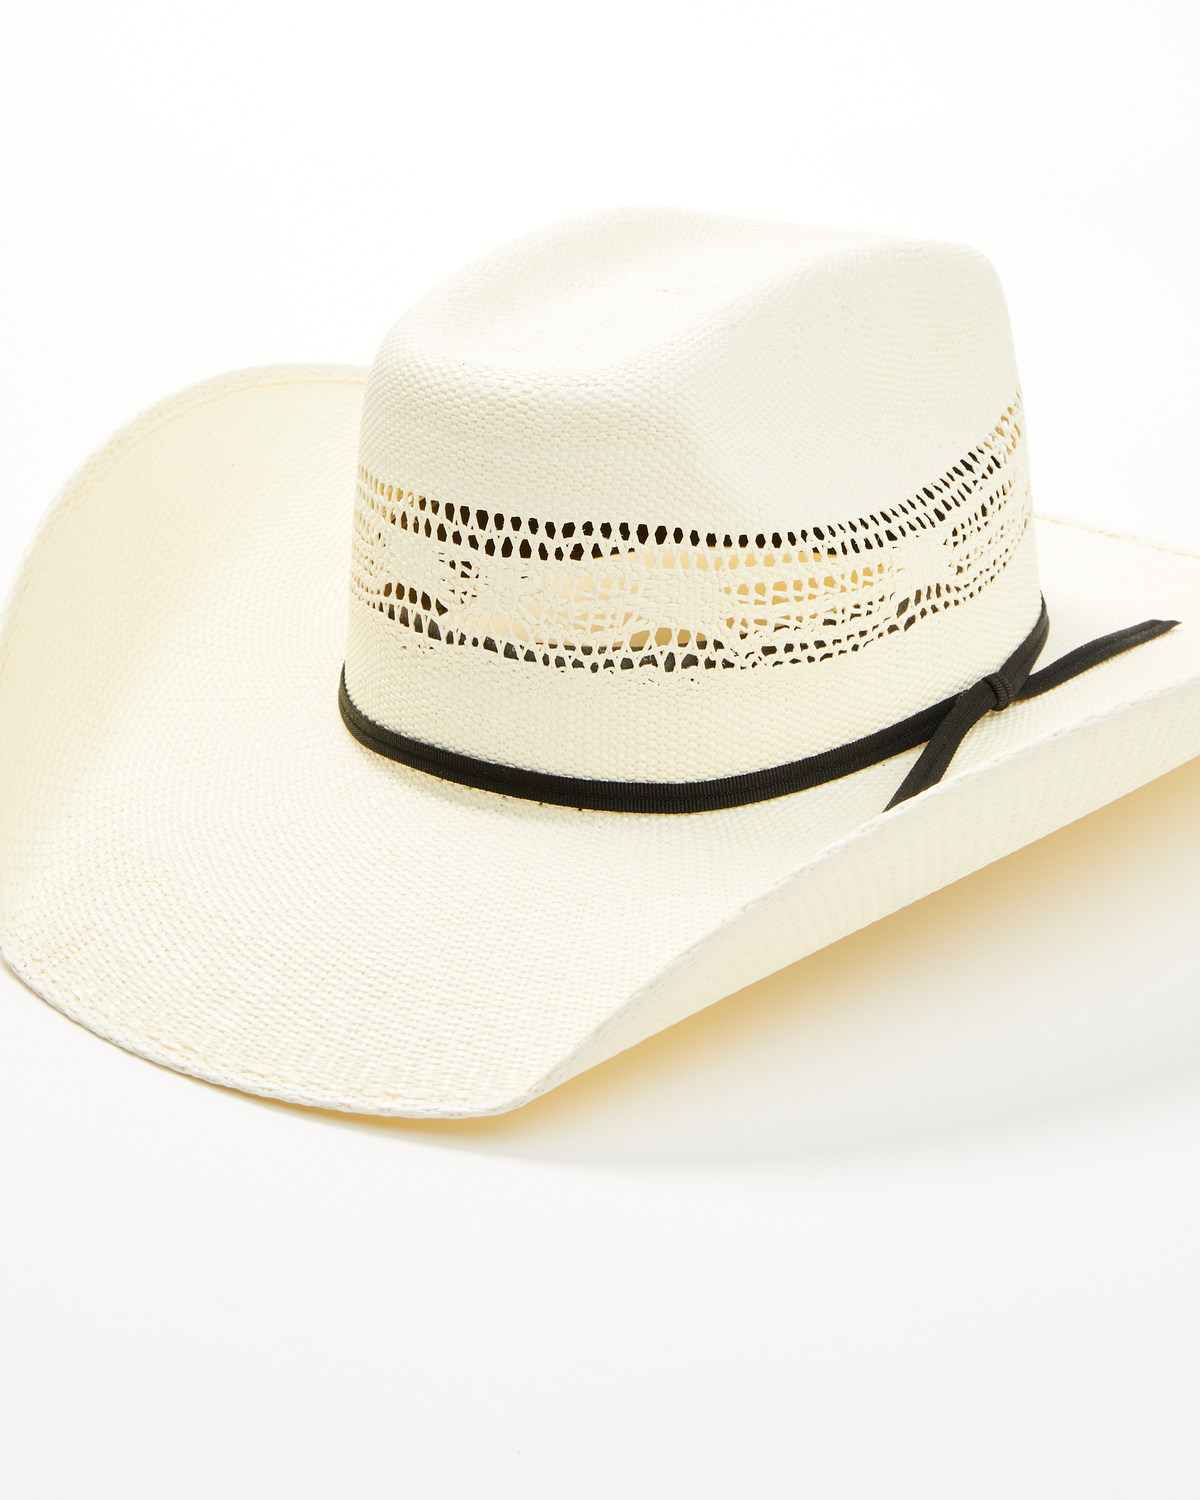 Cody James Criollo Straw Cowboy Hat